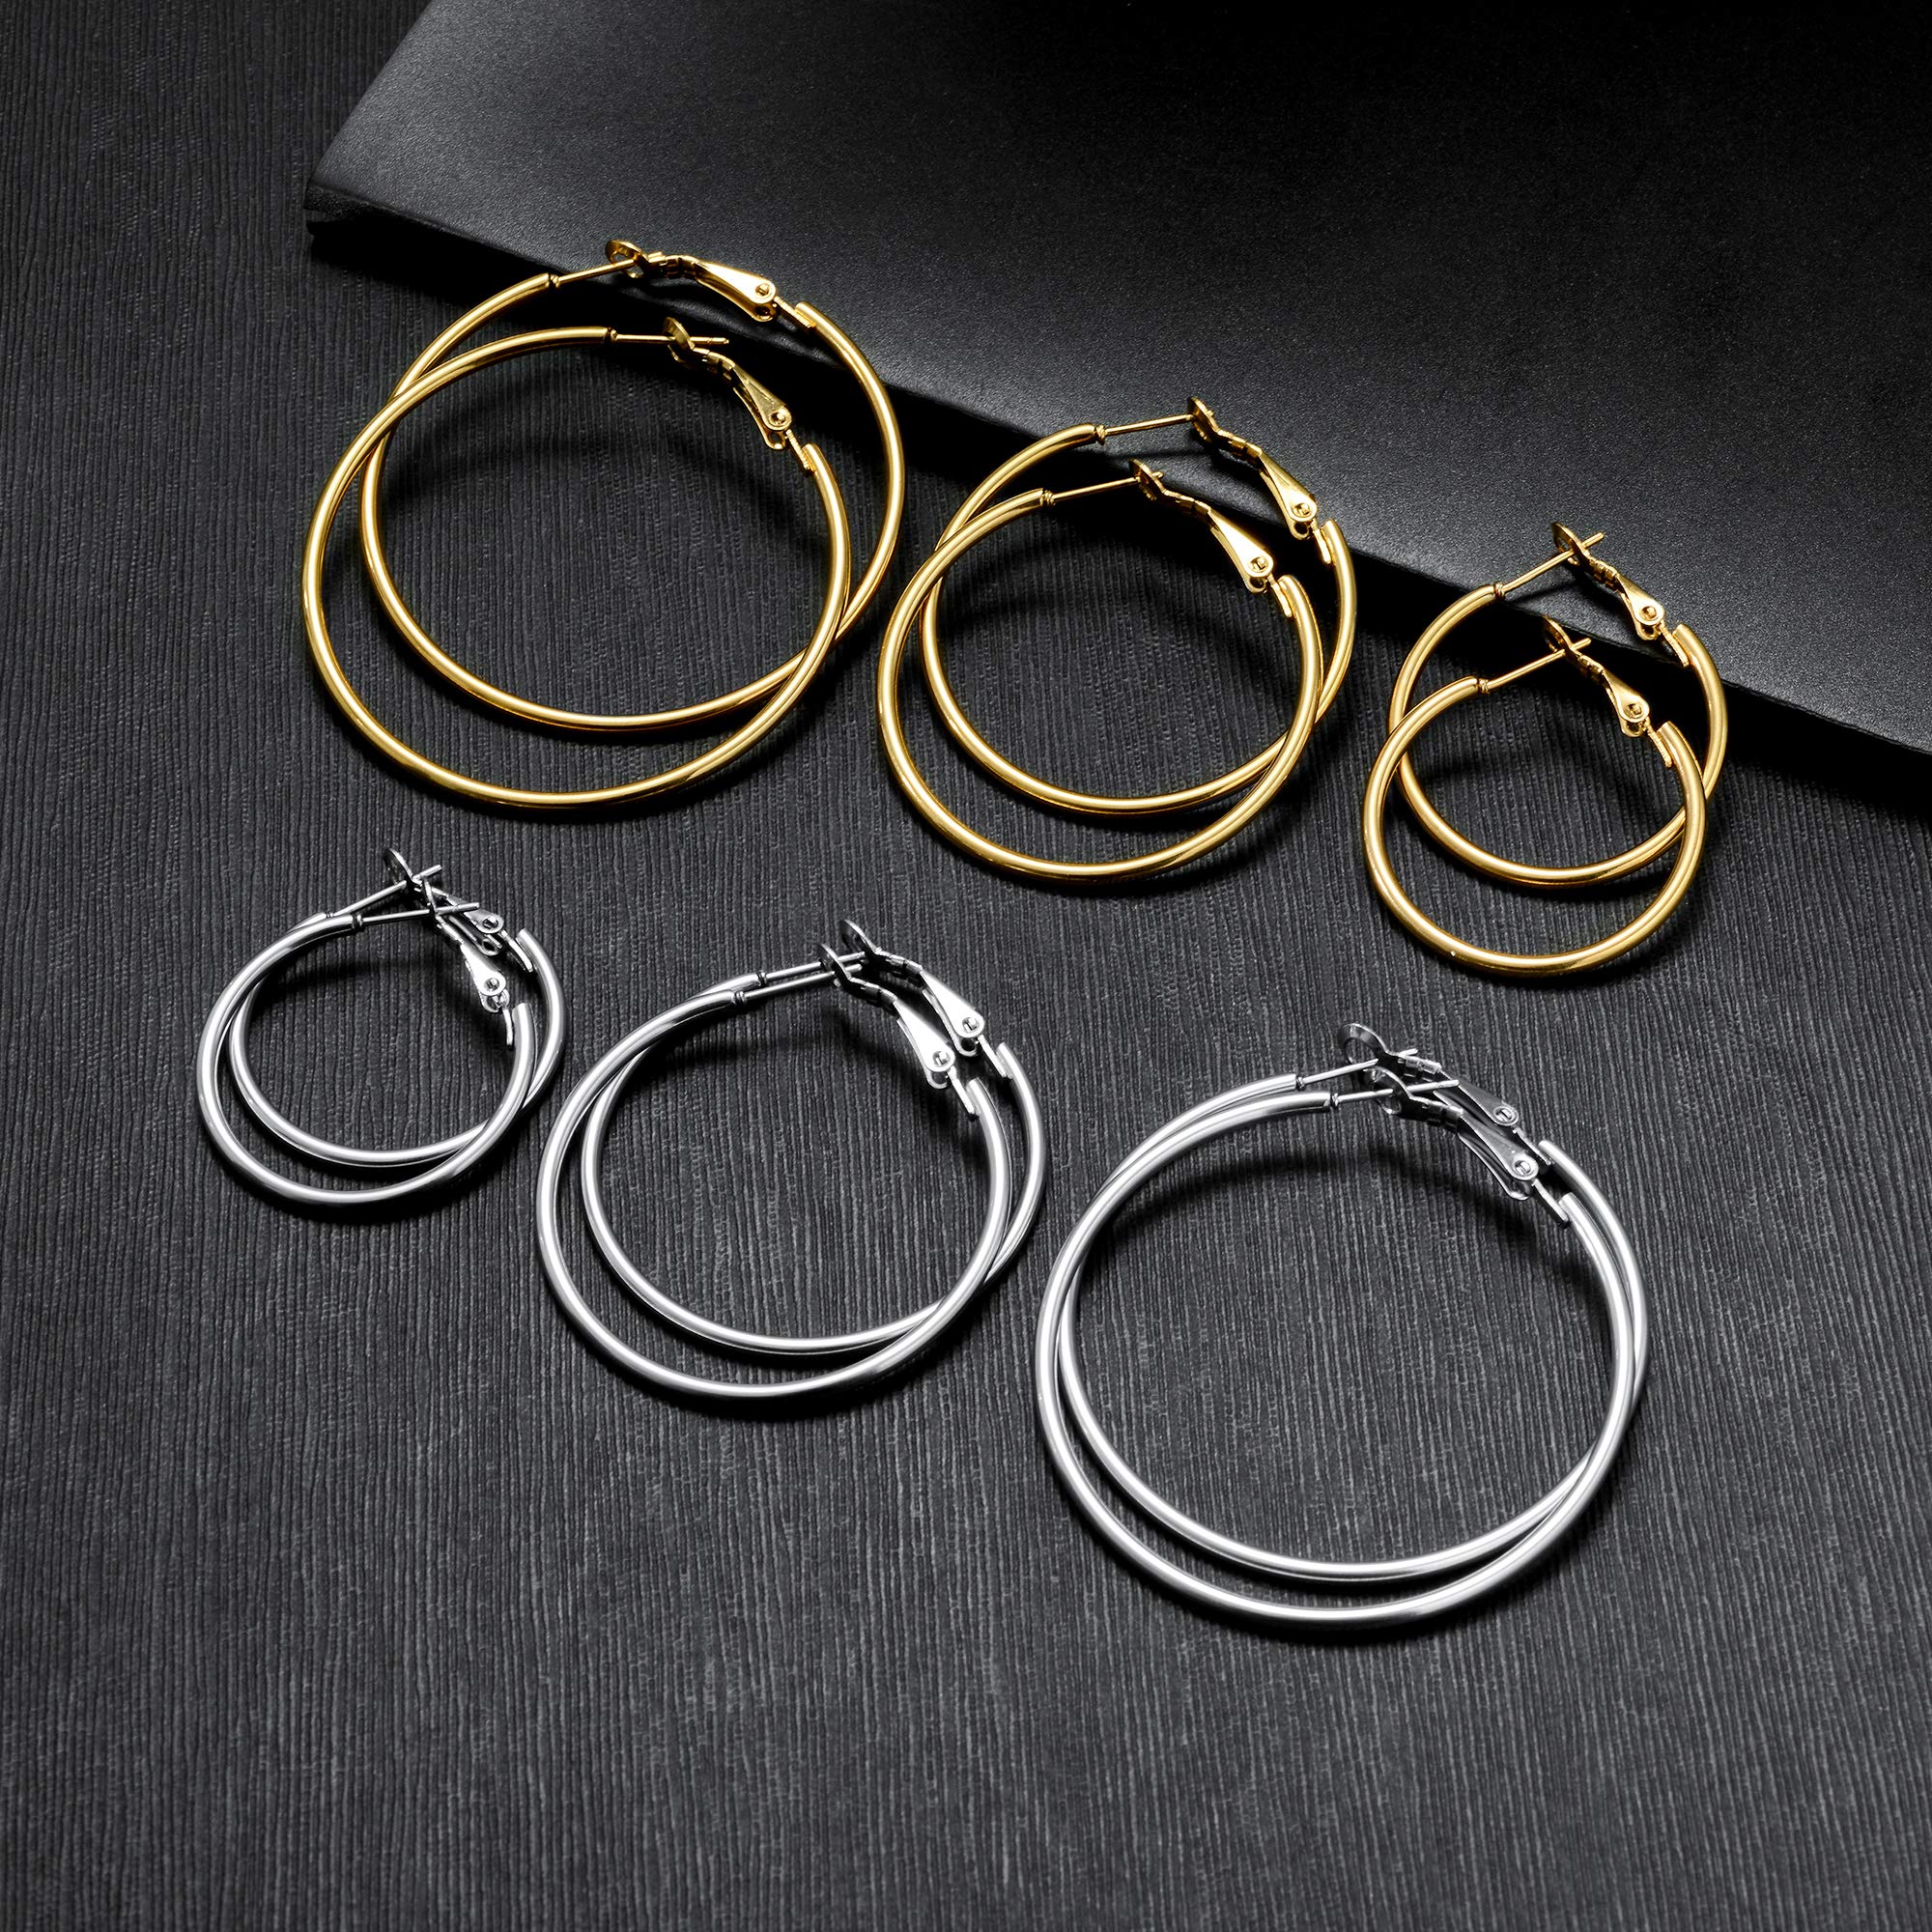 6 Pairs Stainless Steel gold silver Plated Hoop Earrings for Women Girls, Hypoallergenic Hoops Women's Earrings Loop Earrings Set